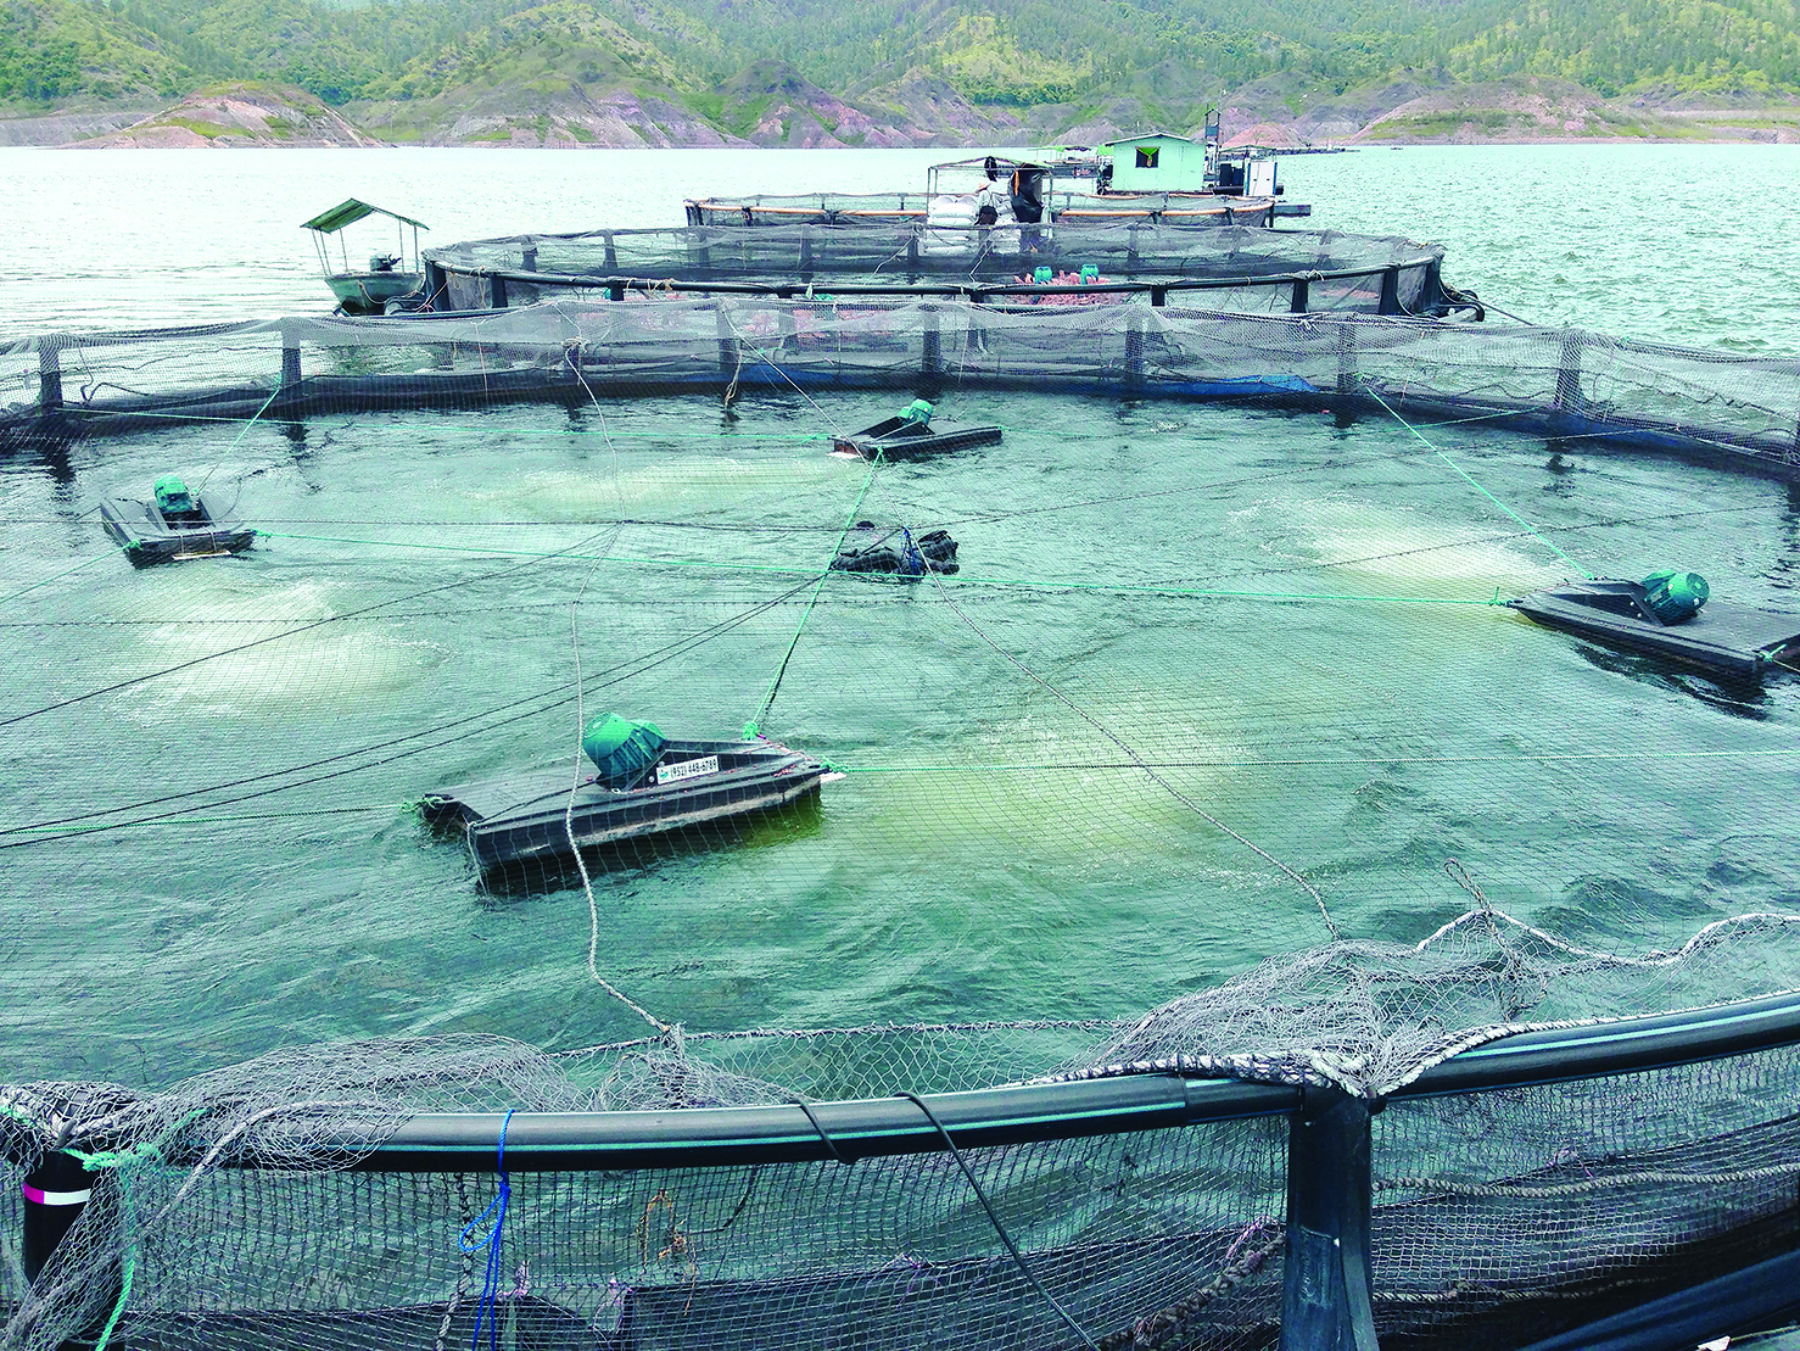 Four Newterra surface aerators agitate an aquaculture bay for fish production